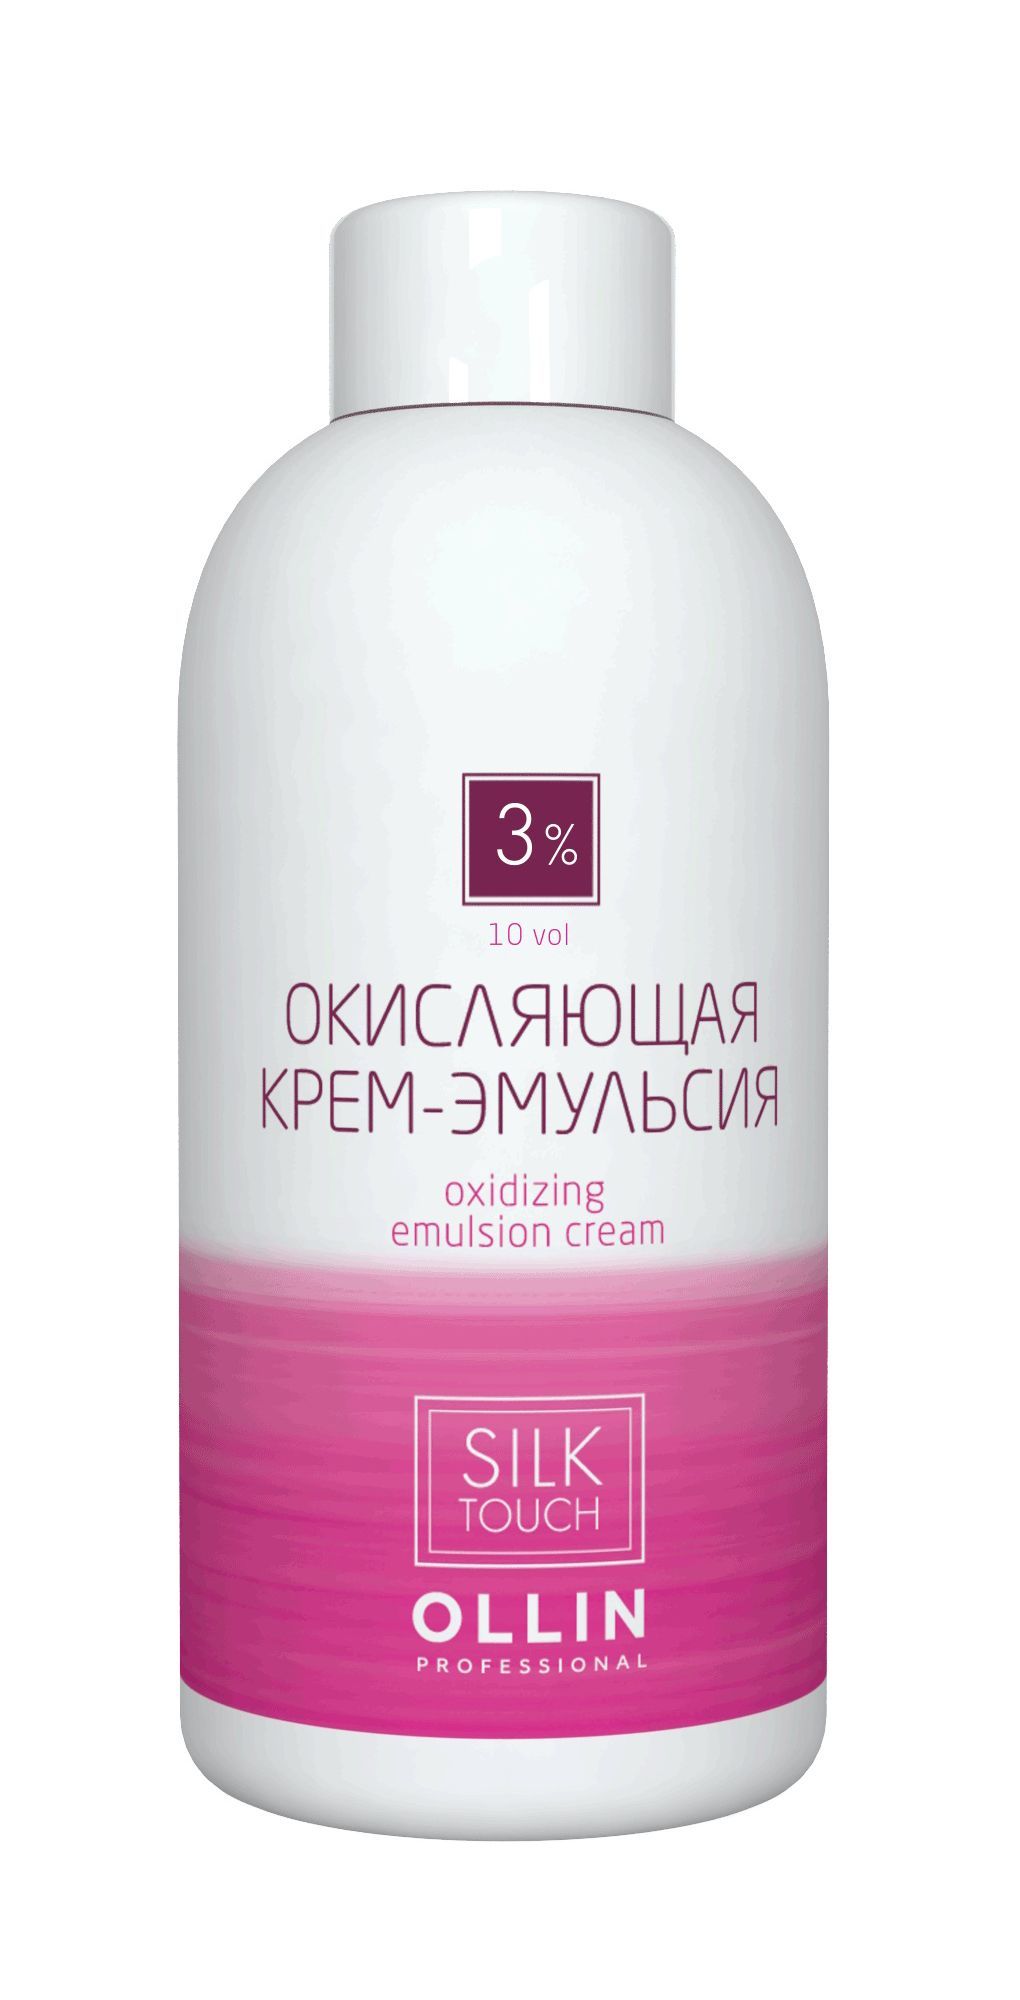 Ollin, Окисляющая крем-эмульсия 3% 10vol серии «Silk Touch», Фото интернет-магазин Премиум-Косметика.РФ